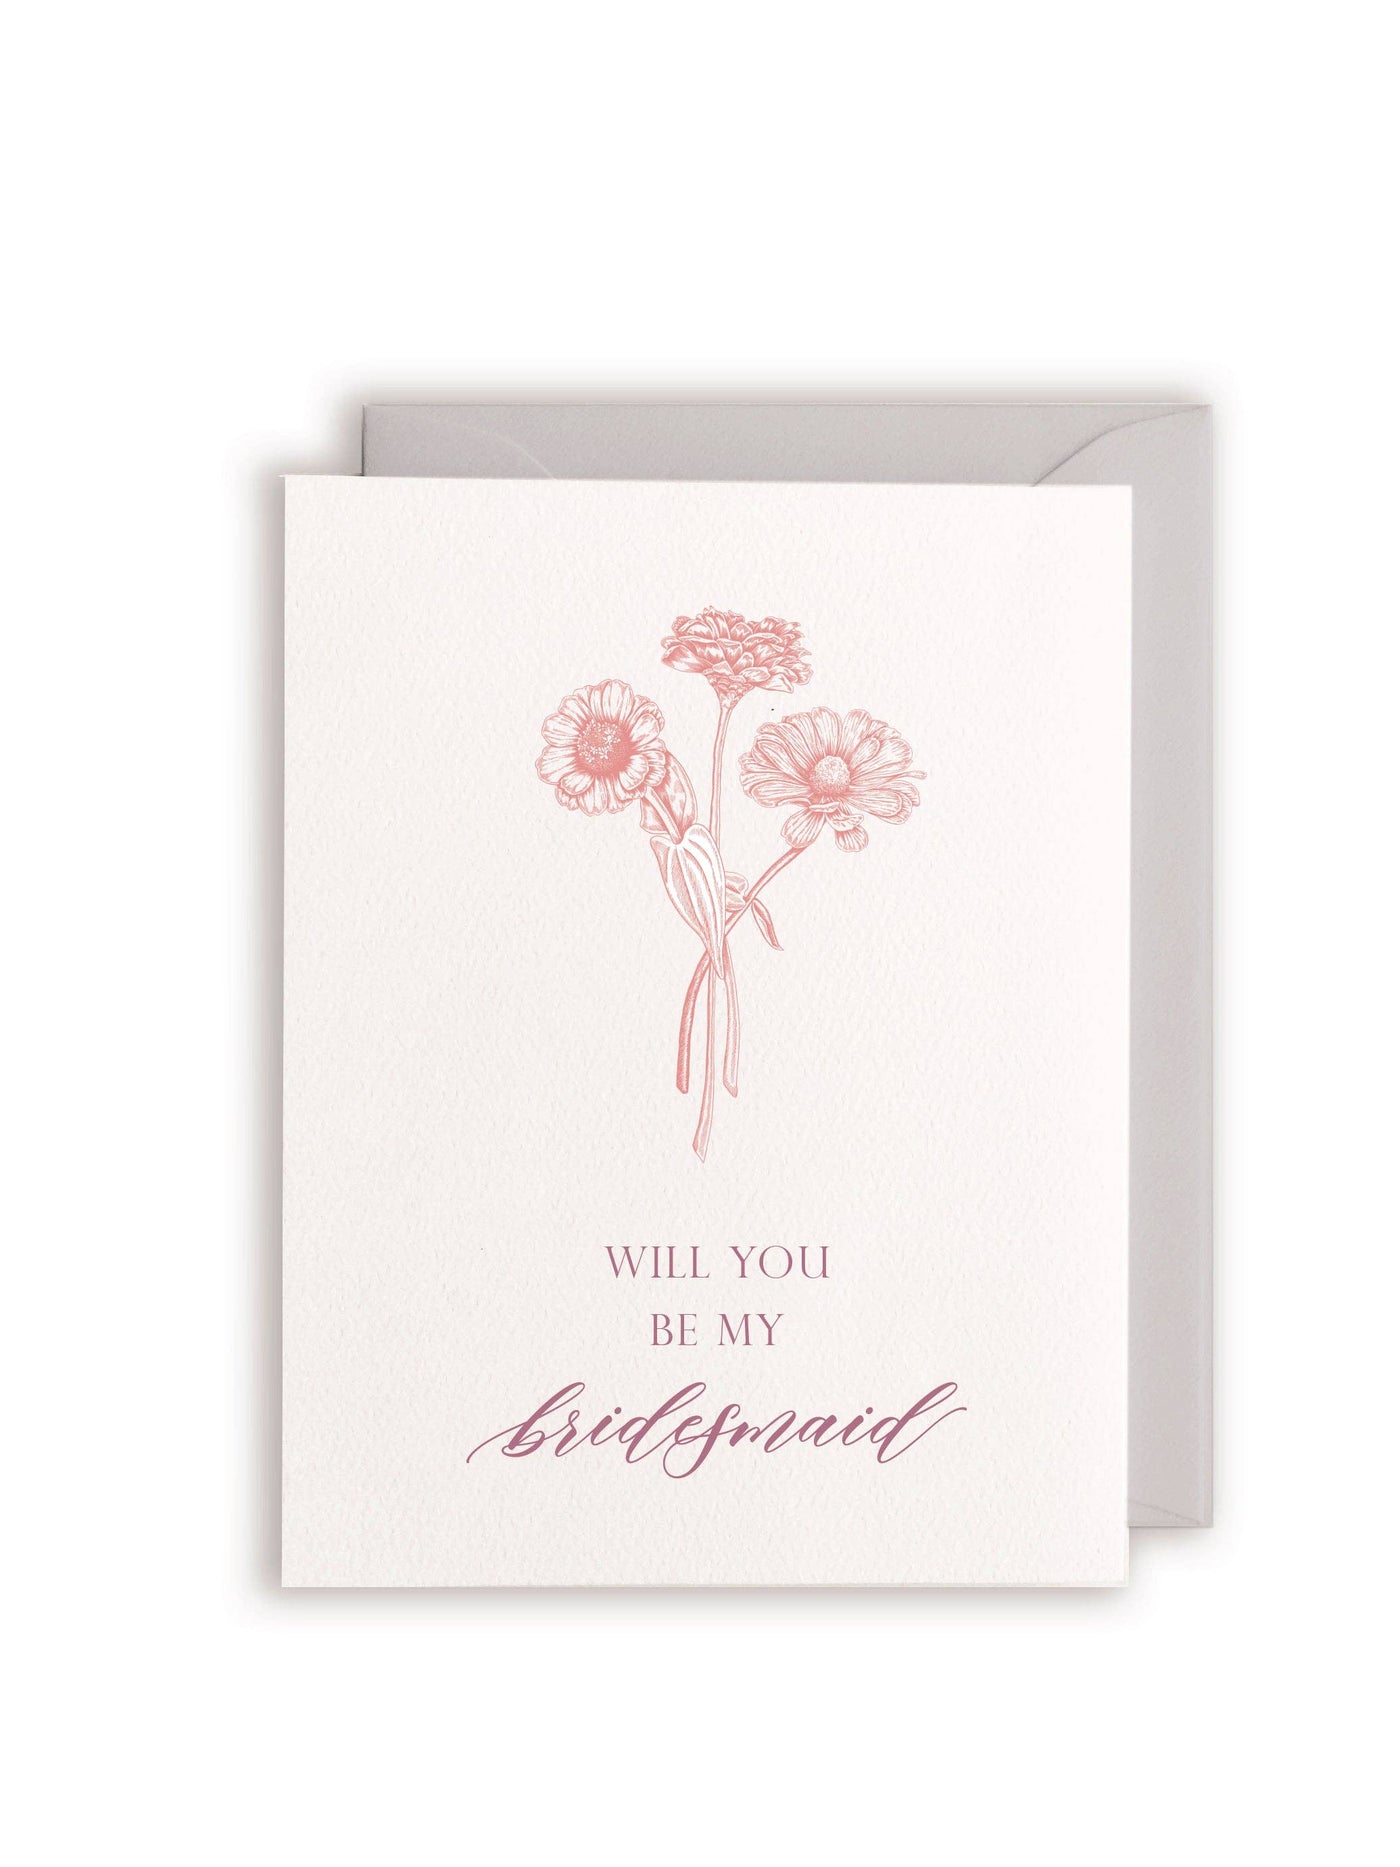 Be My Bridesmaid Letterpress Greeting Card